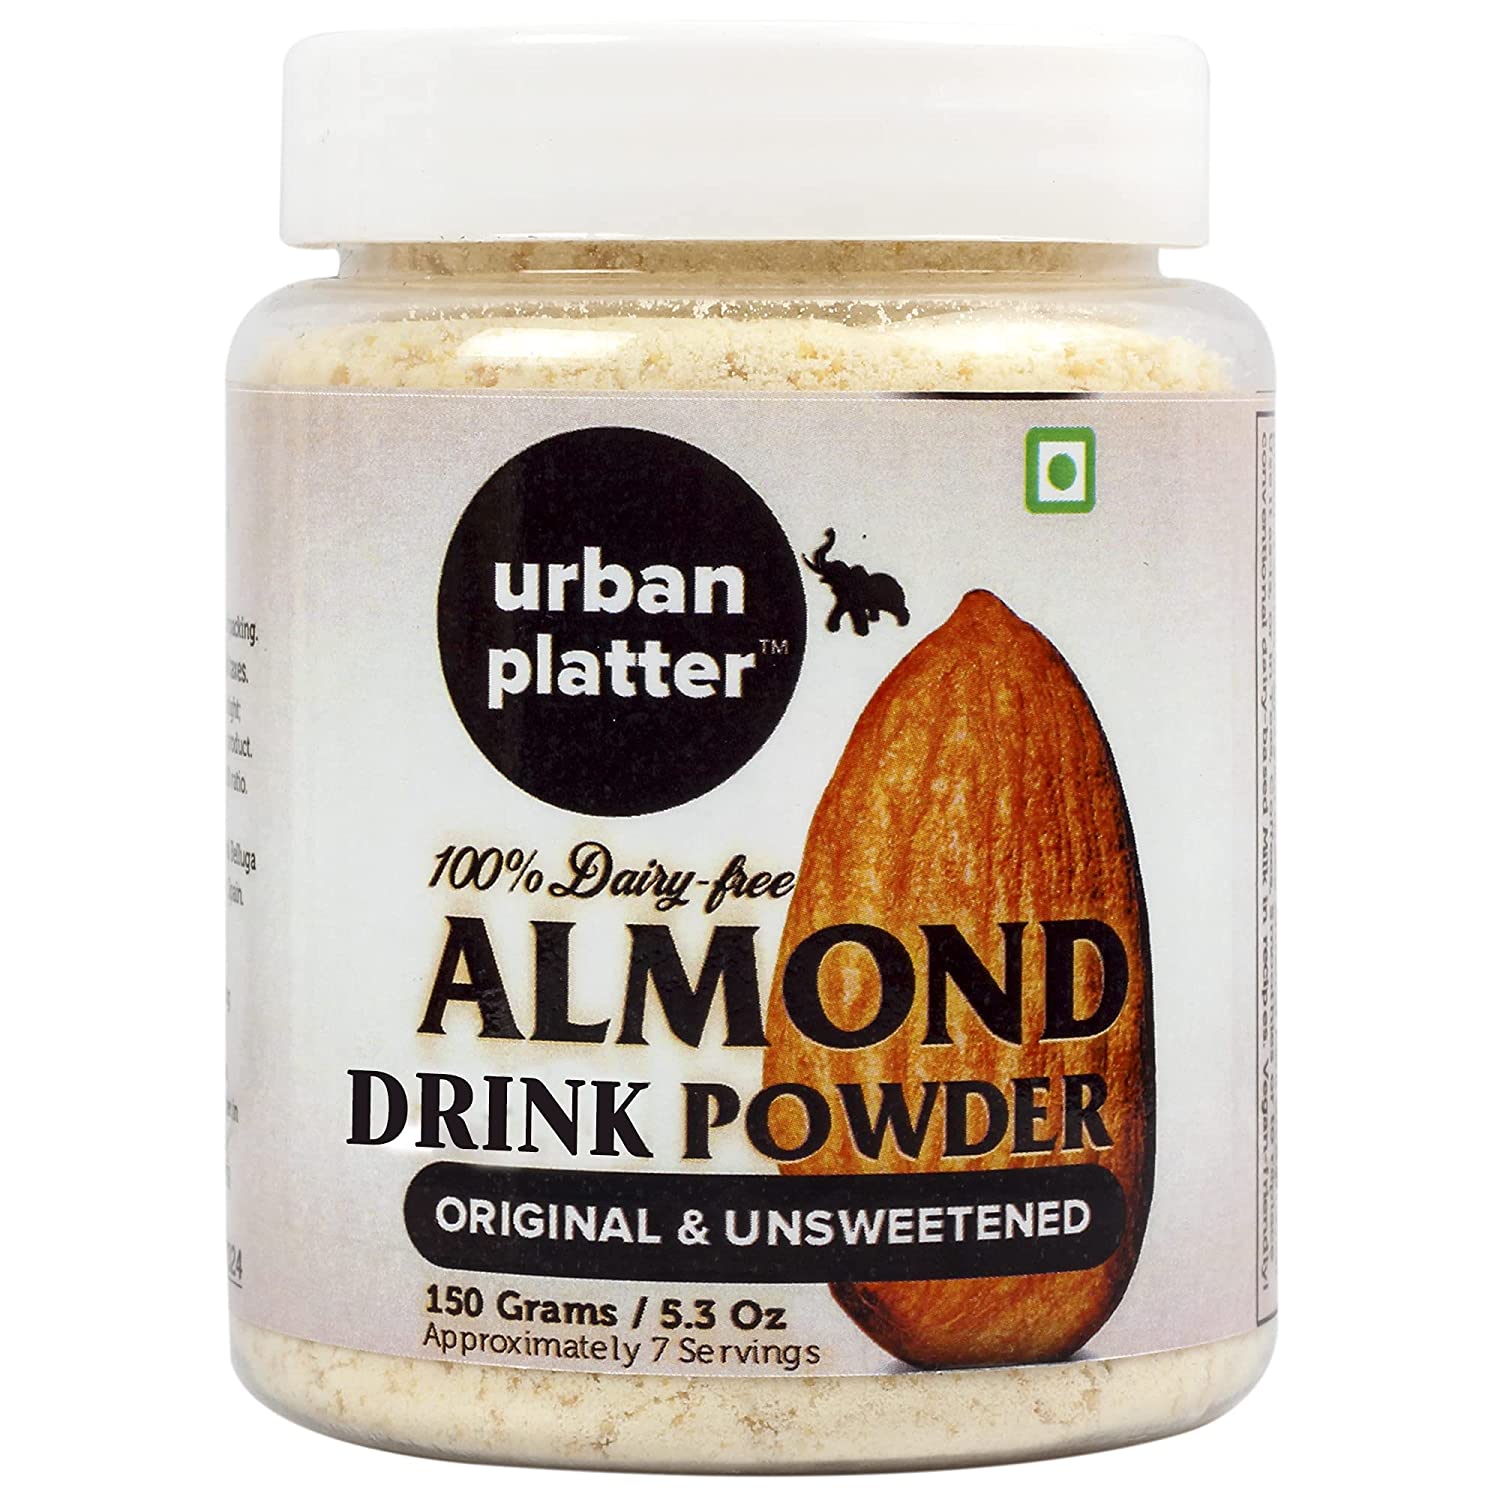 Urban Platter Almond Drink Powder Image